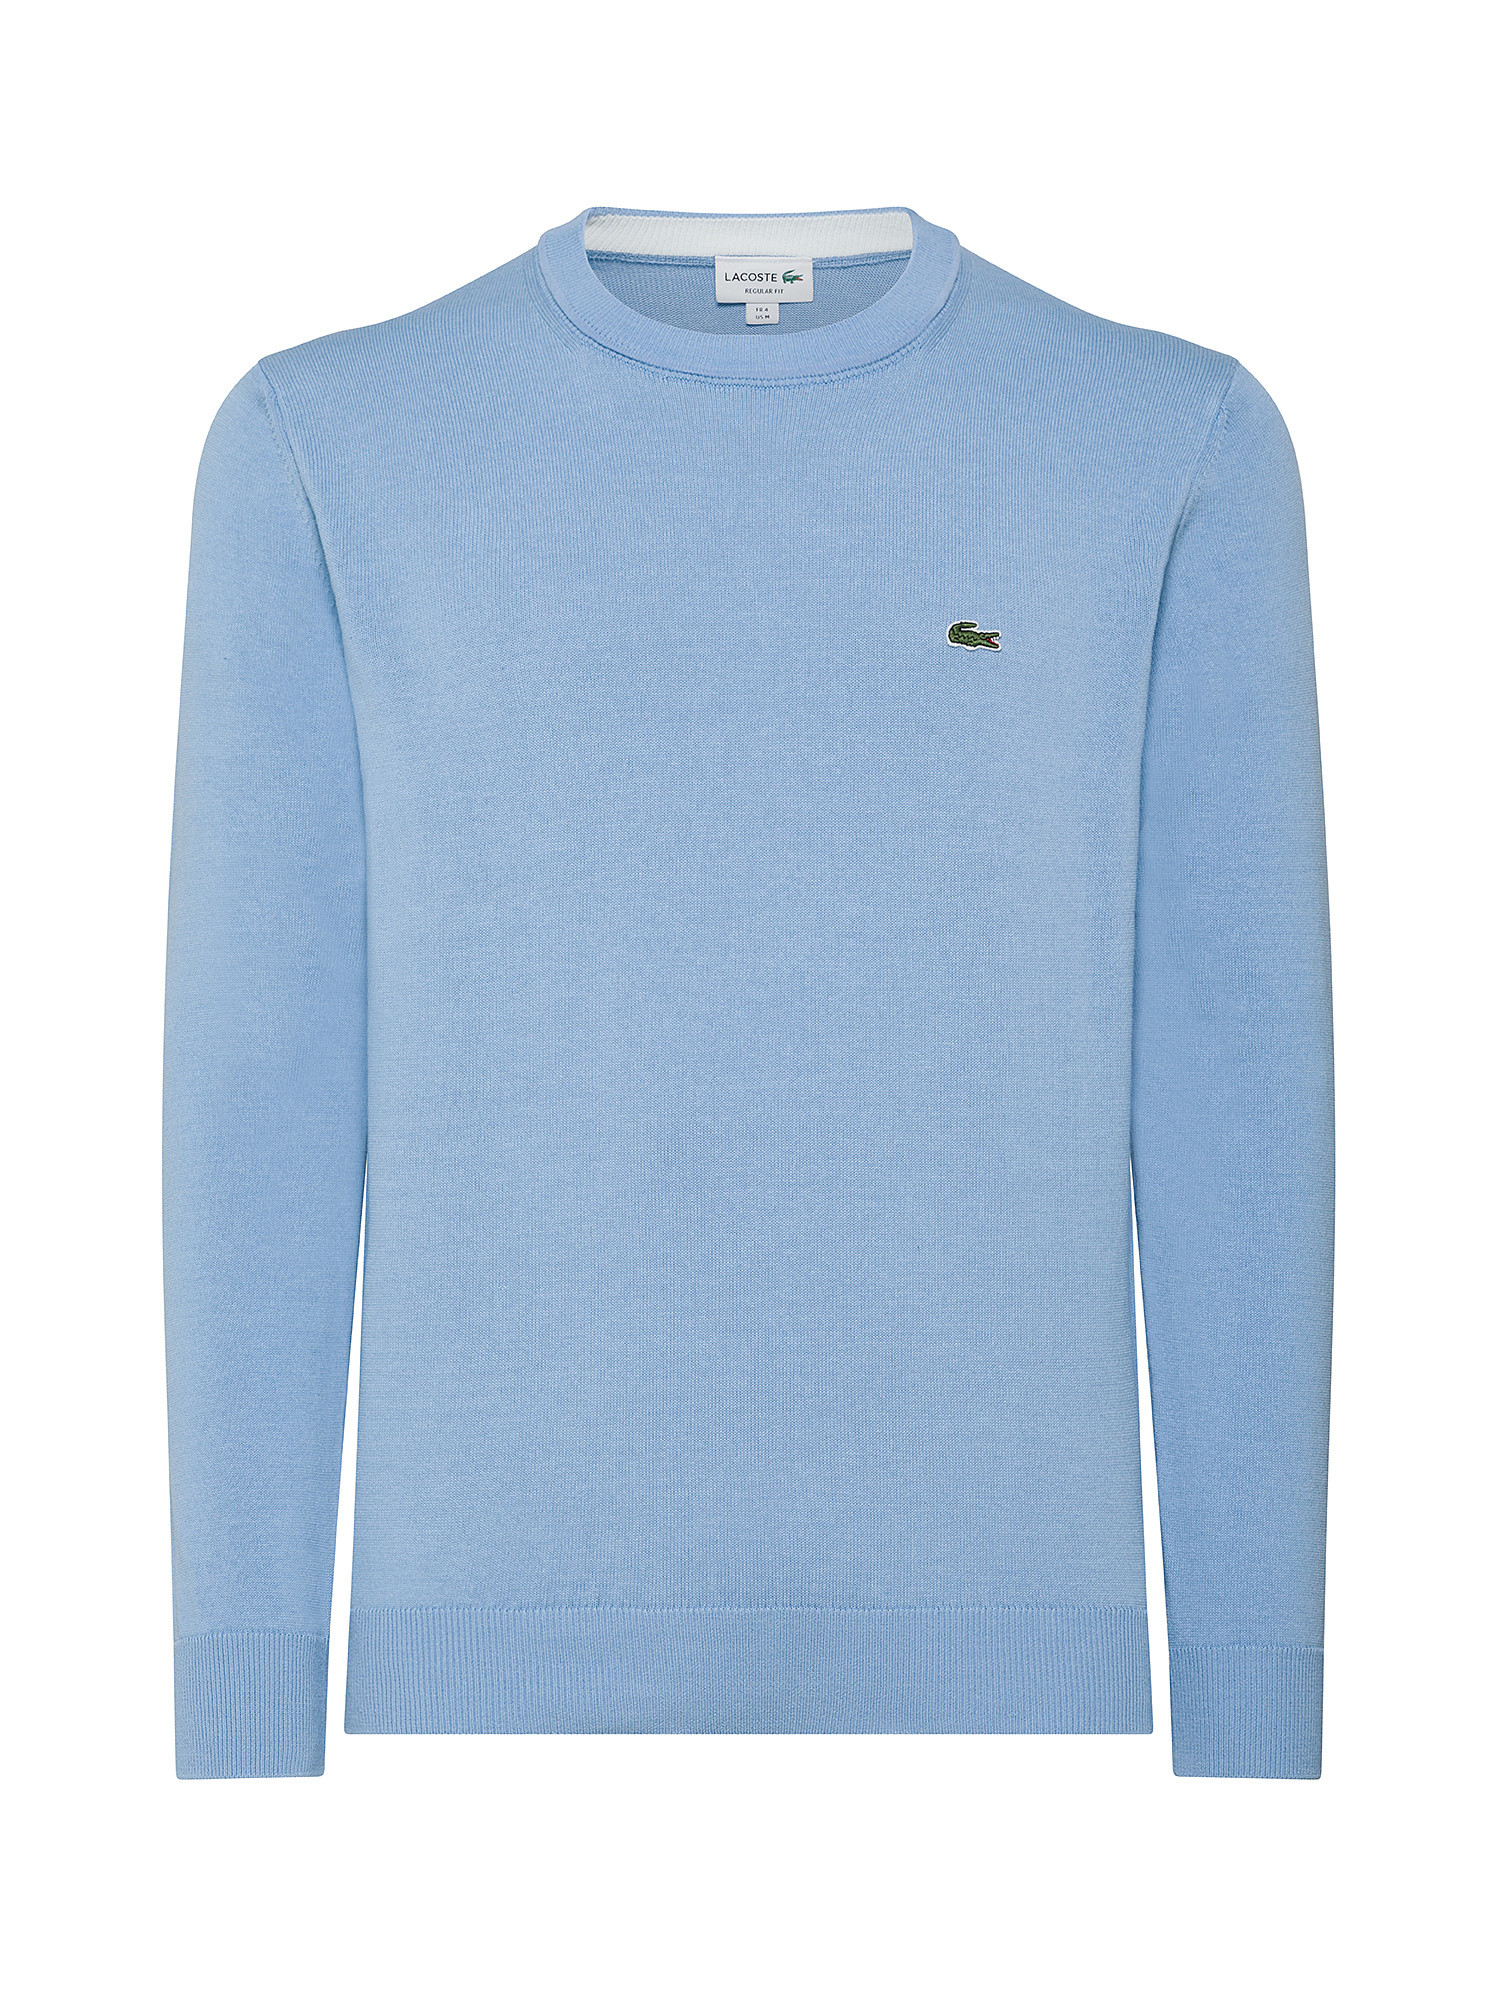 Lacoste - Cotton crewneck sweater, Light Blue, large image number 0